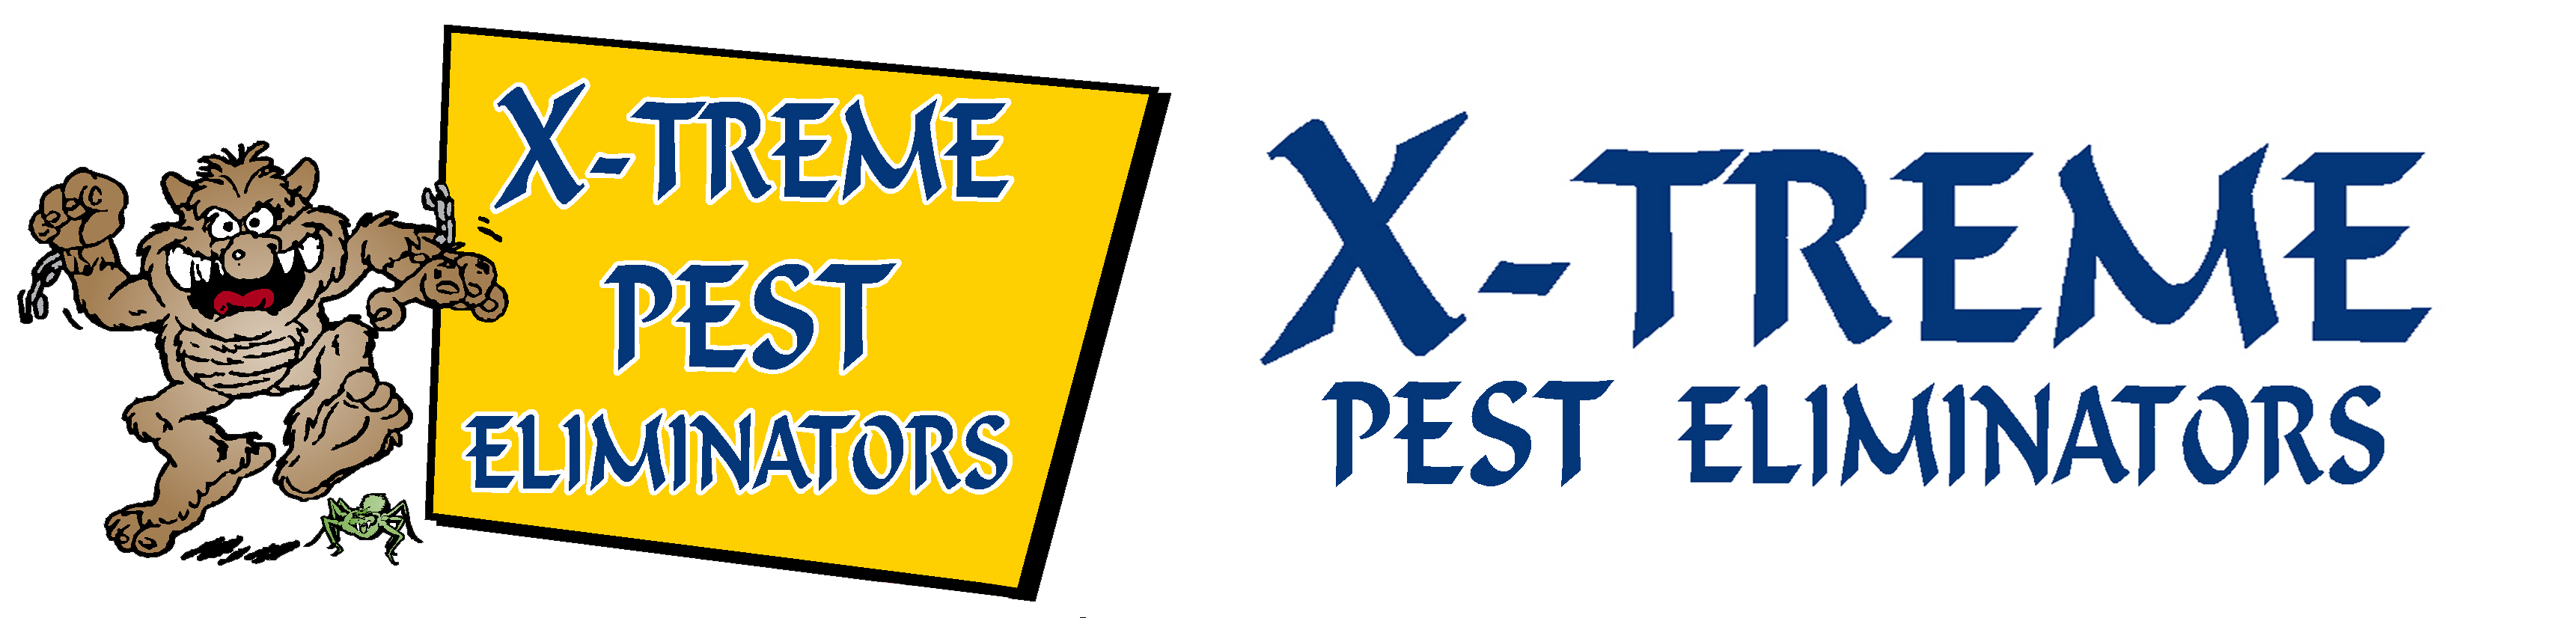 Xtreme-logo1